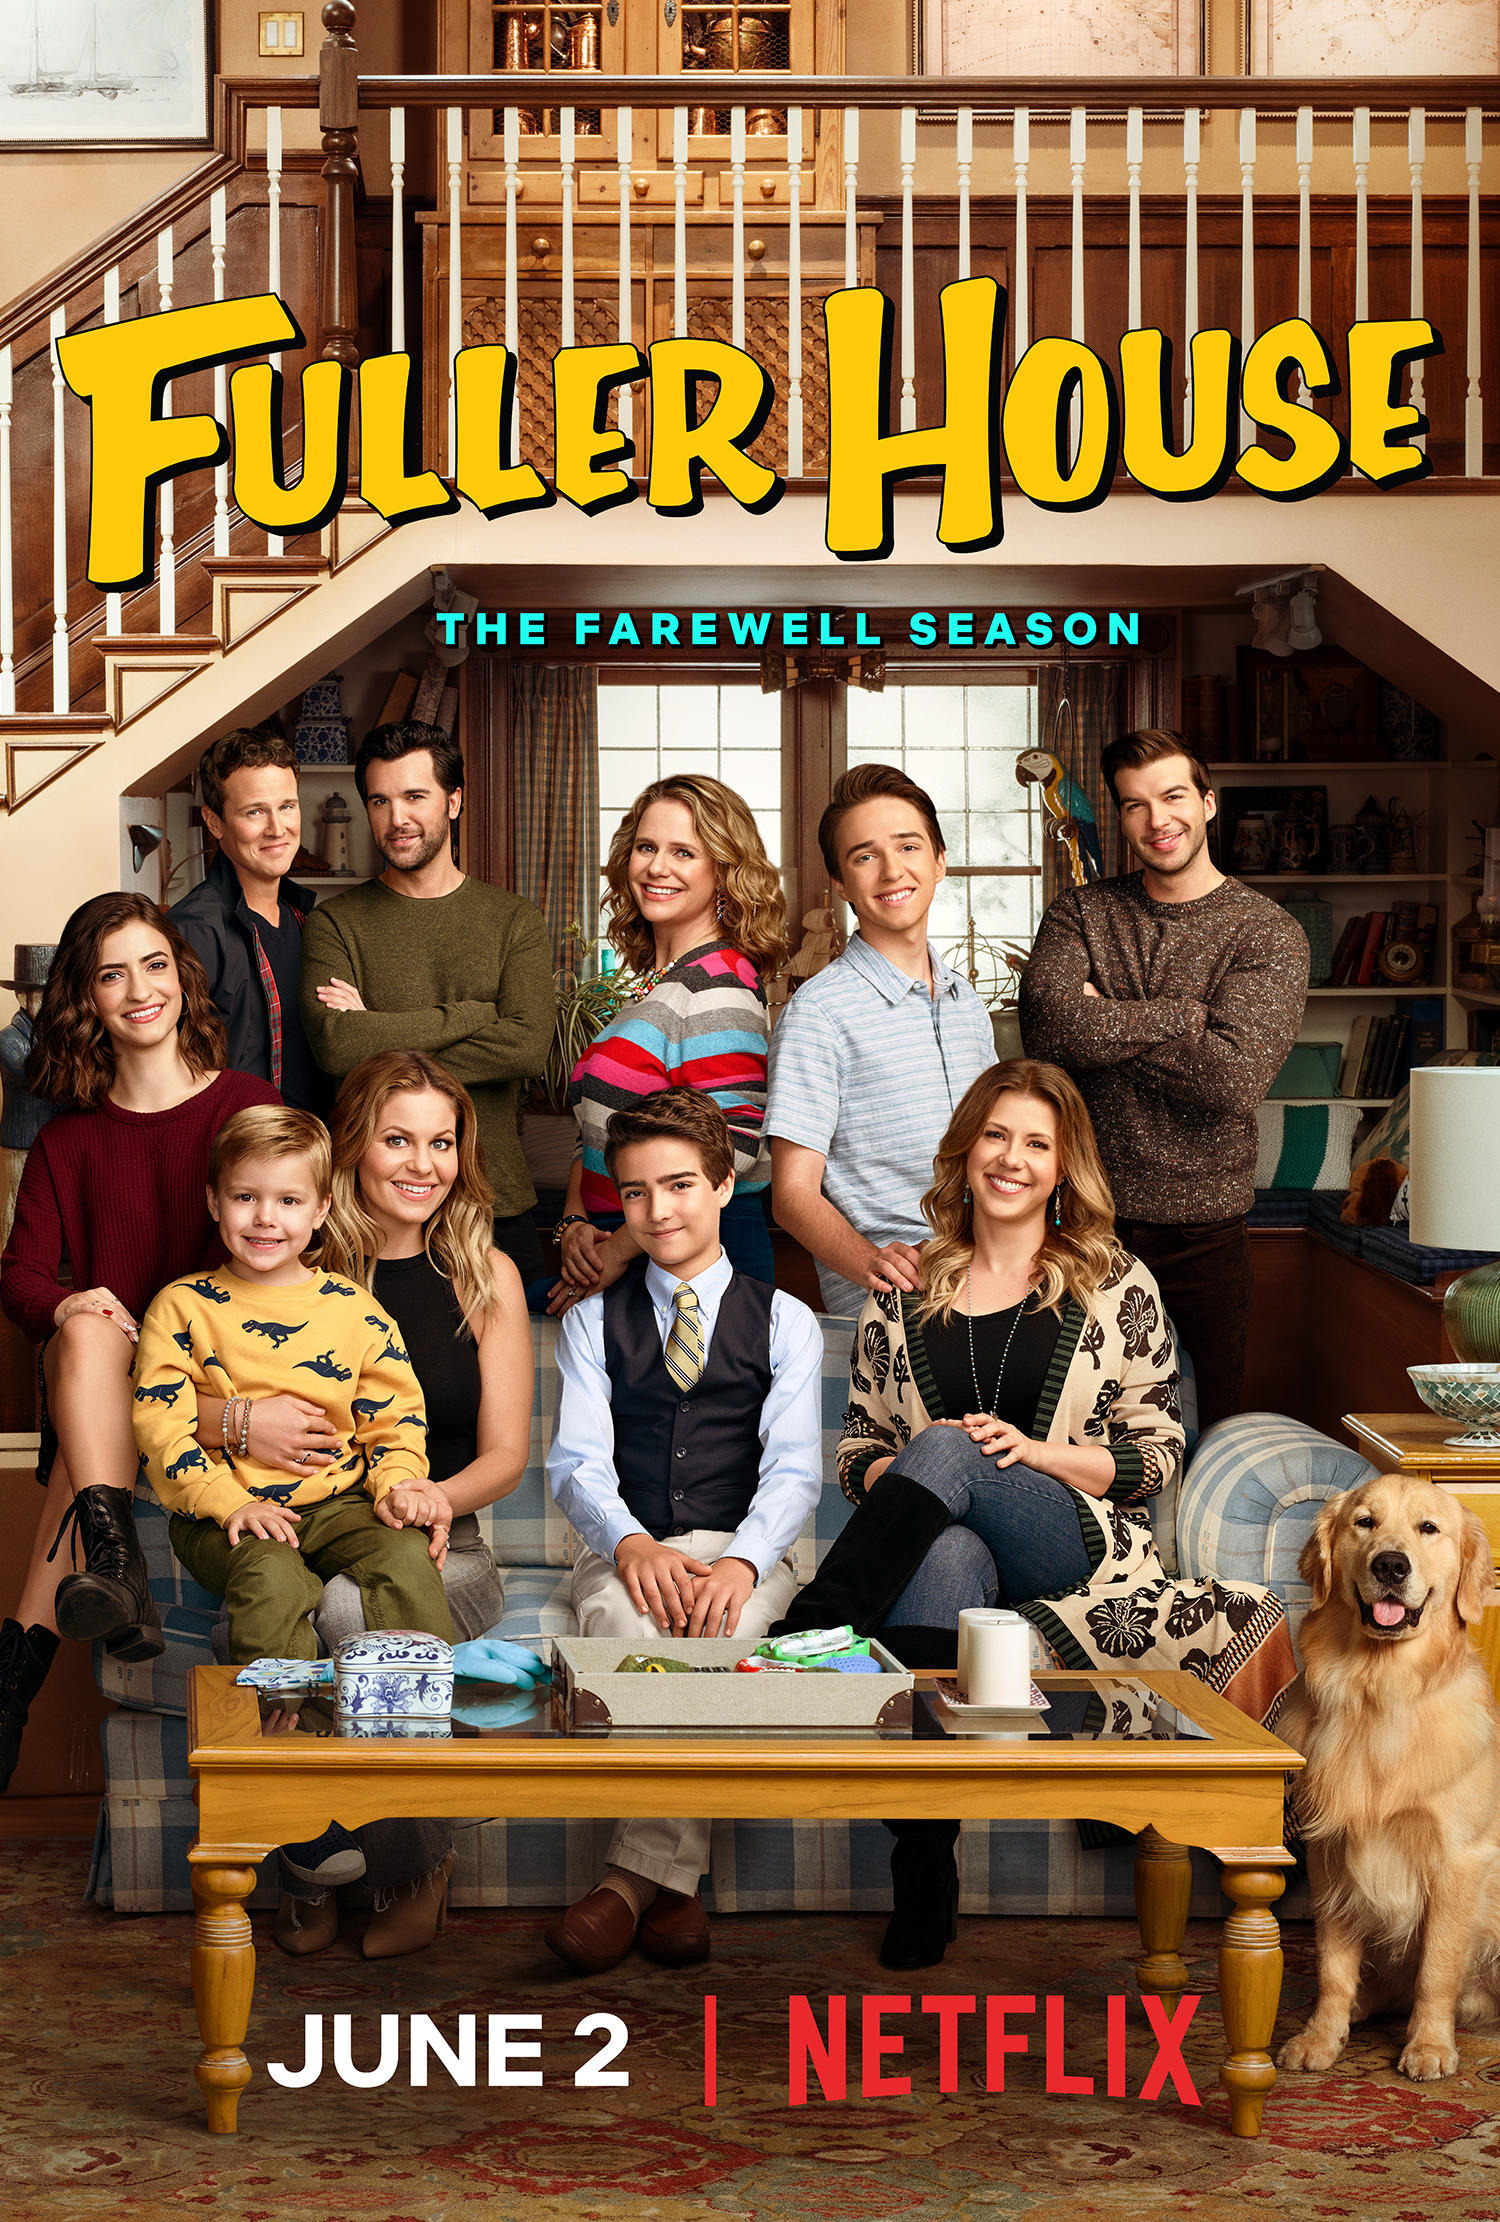 Mega Sized Movie Poster Image for Fuller House (#16 of 16)